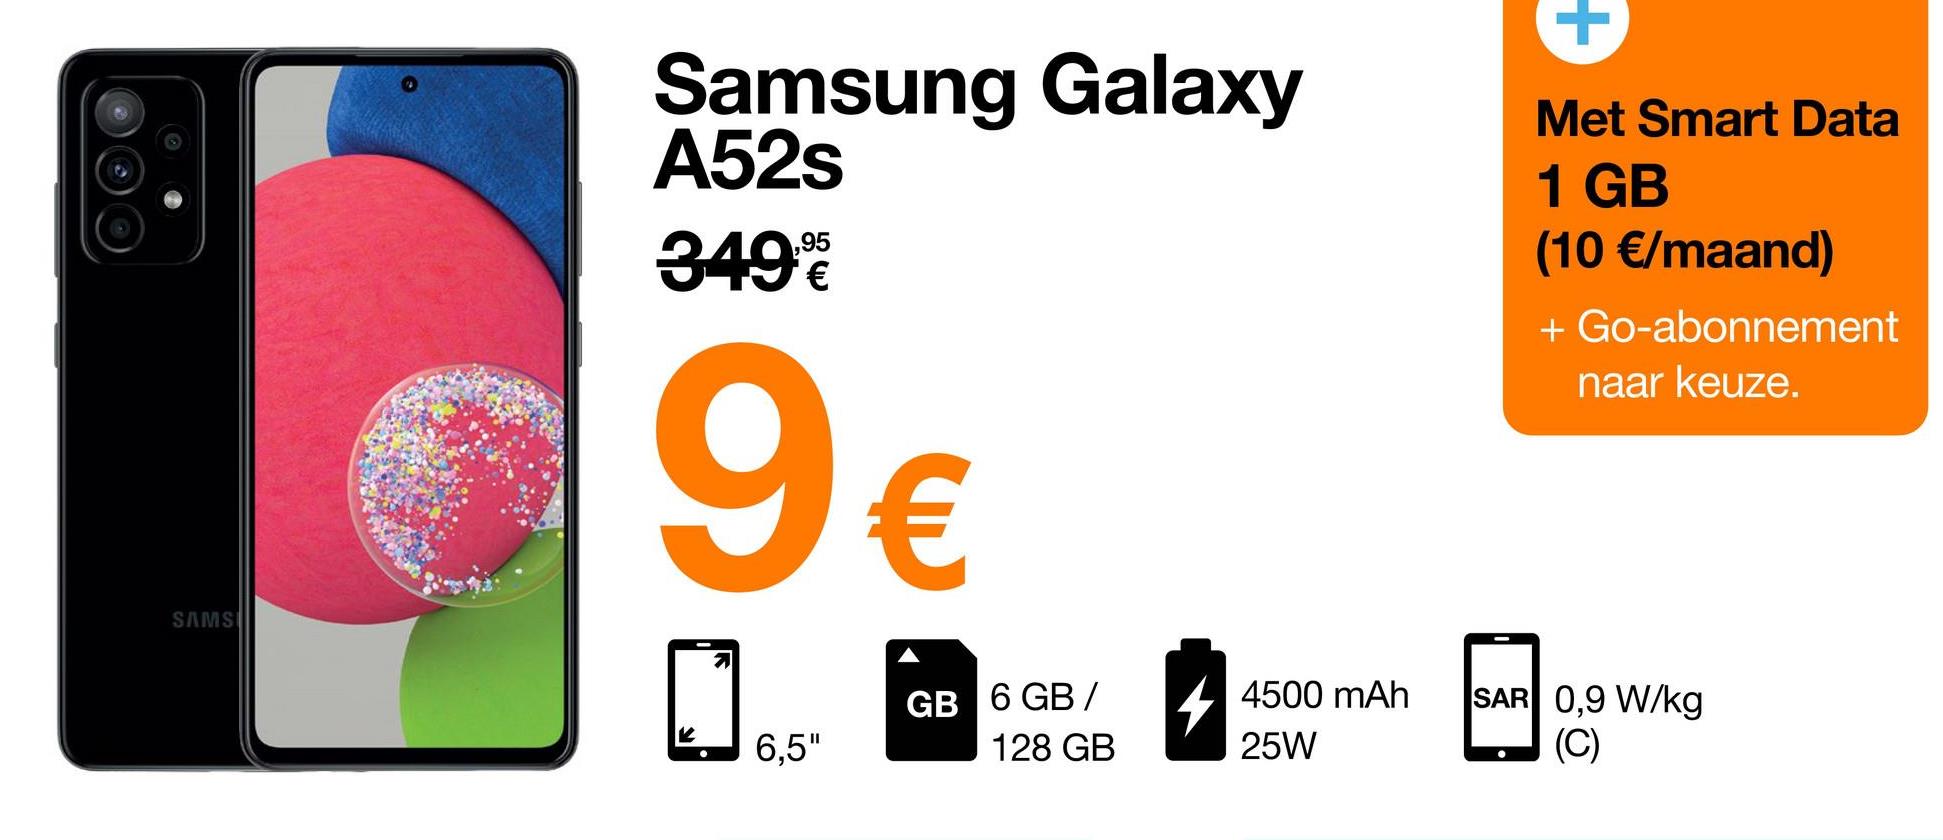 +
Samsung Galaxy
A52s
349€
.95
€
Met Smart Data
1 GB
(10 €/maand)
+ Go-abonnement
naar keuze.
a
9 €
SAMS
0
GB 6 GB /
4500 mAh
25W
SAR 0,9 W/kg
(C)
6,5"
128 GB
